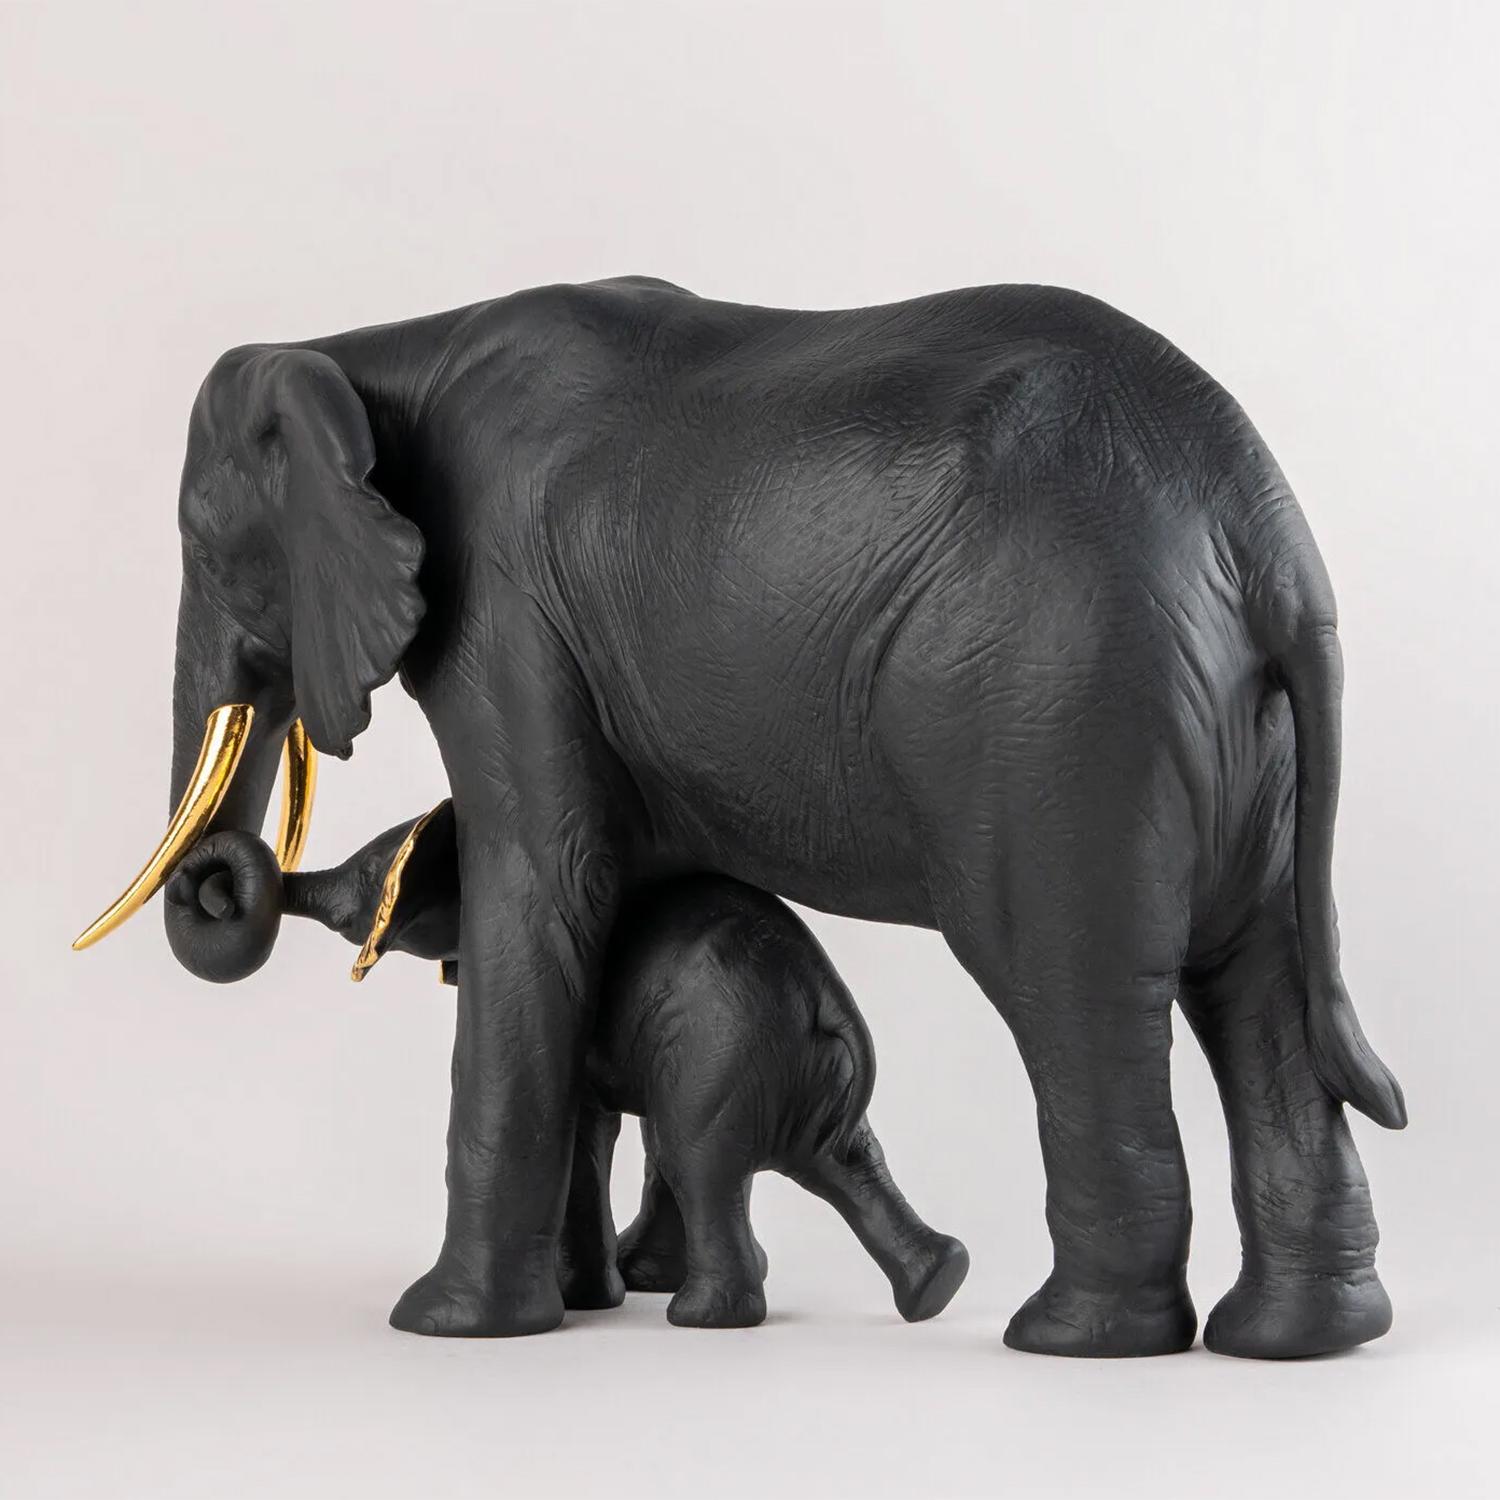 Hand-Painted Elephants Black Sculpture For Sale